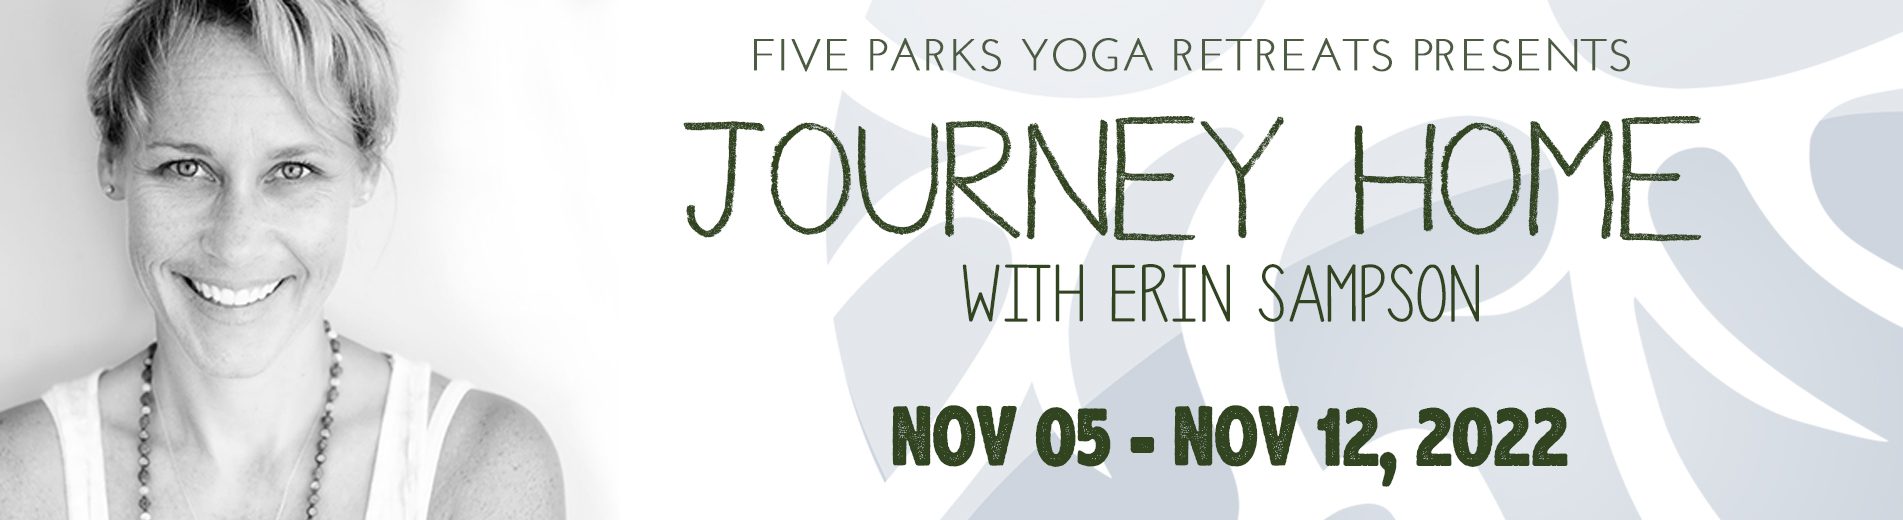 Yoga Retreats in Costa Rica - Five Parks Yoga & Erin Sampson